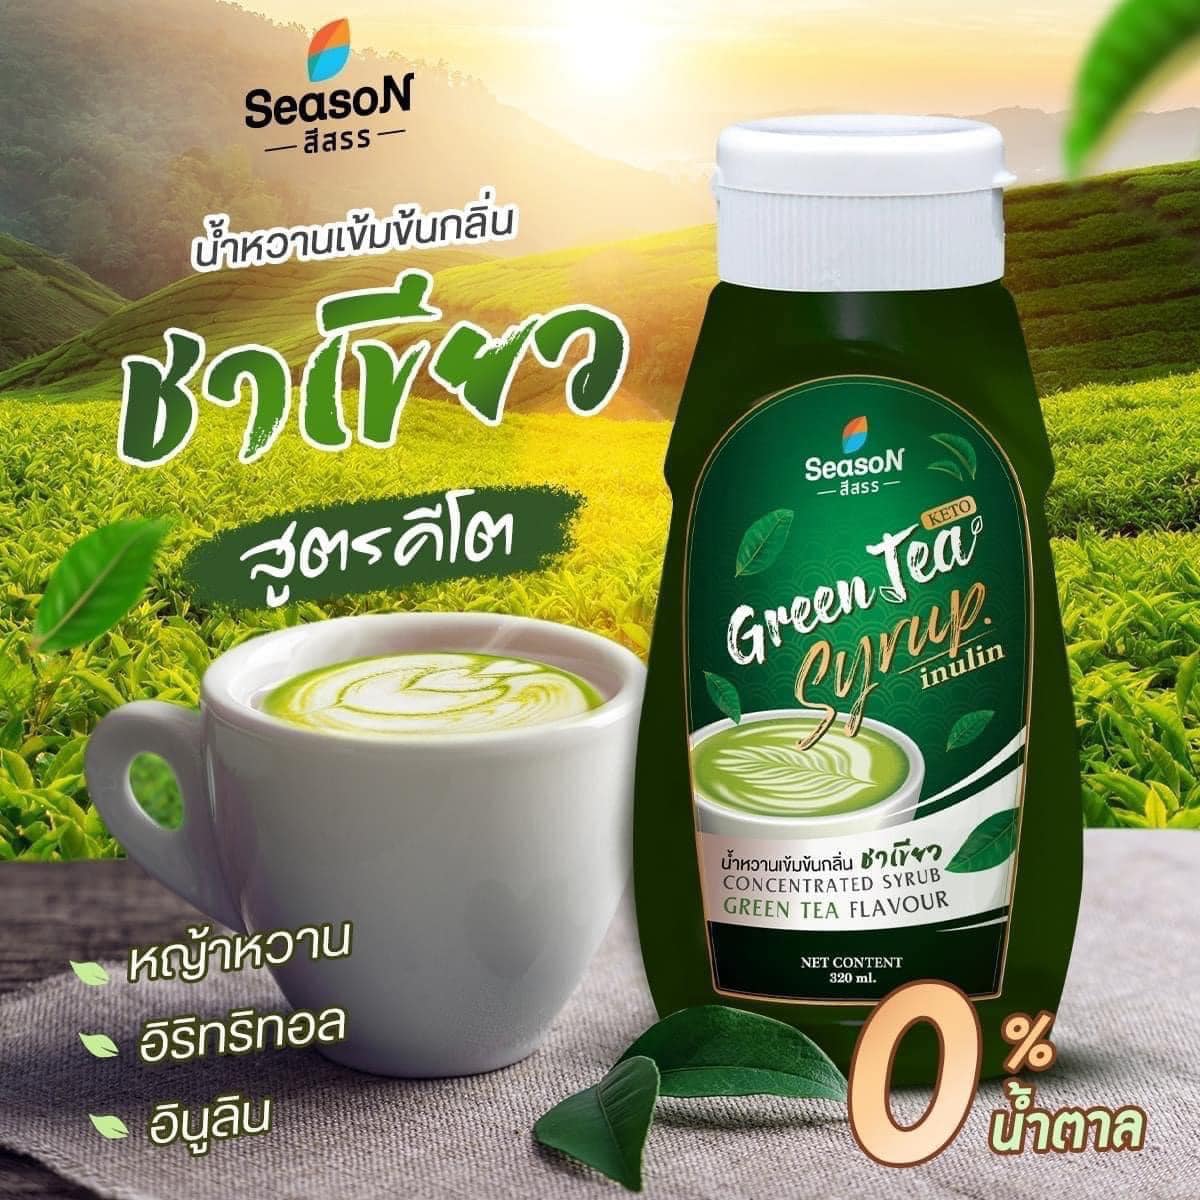 Sugar Free Sirup Keto Green Tea